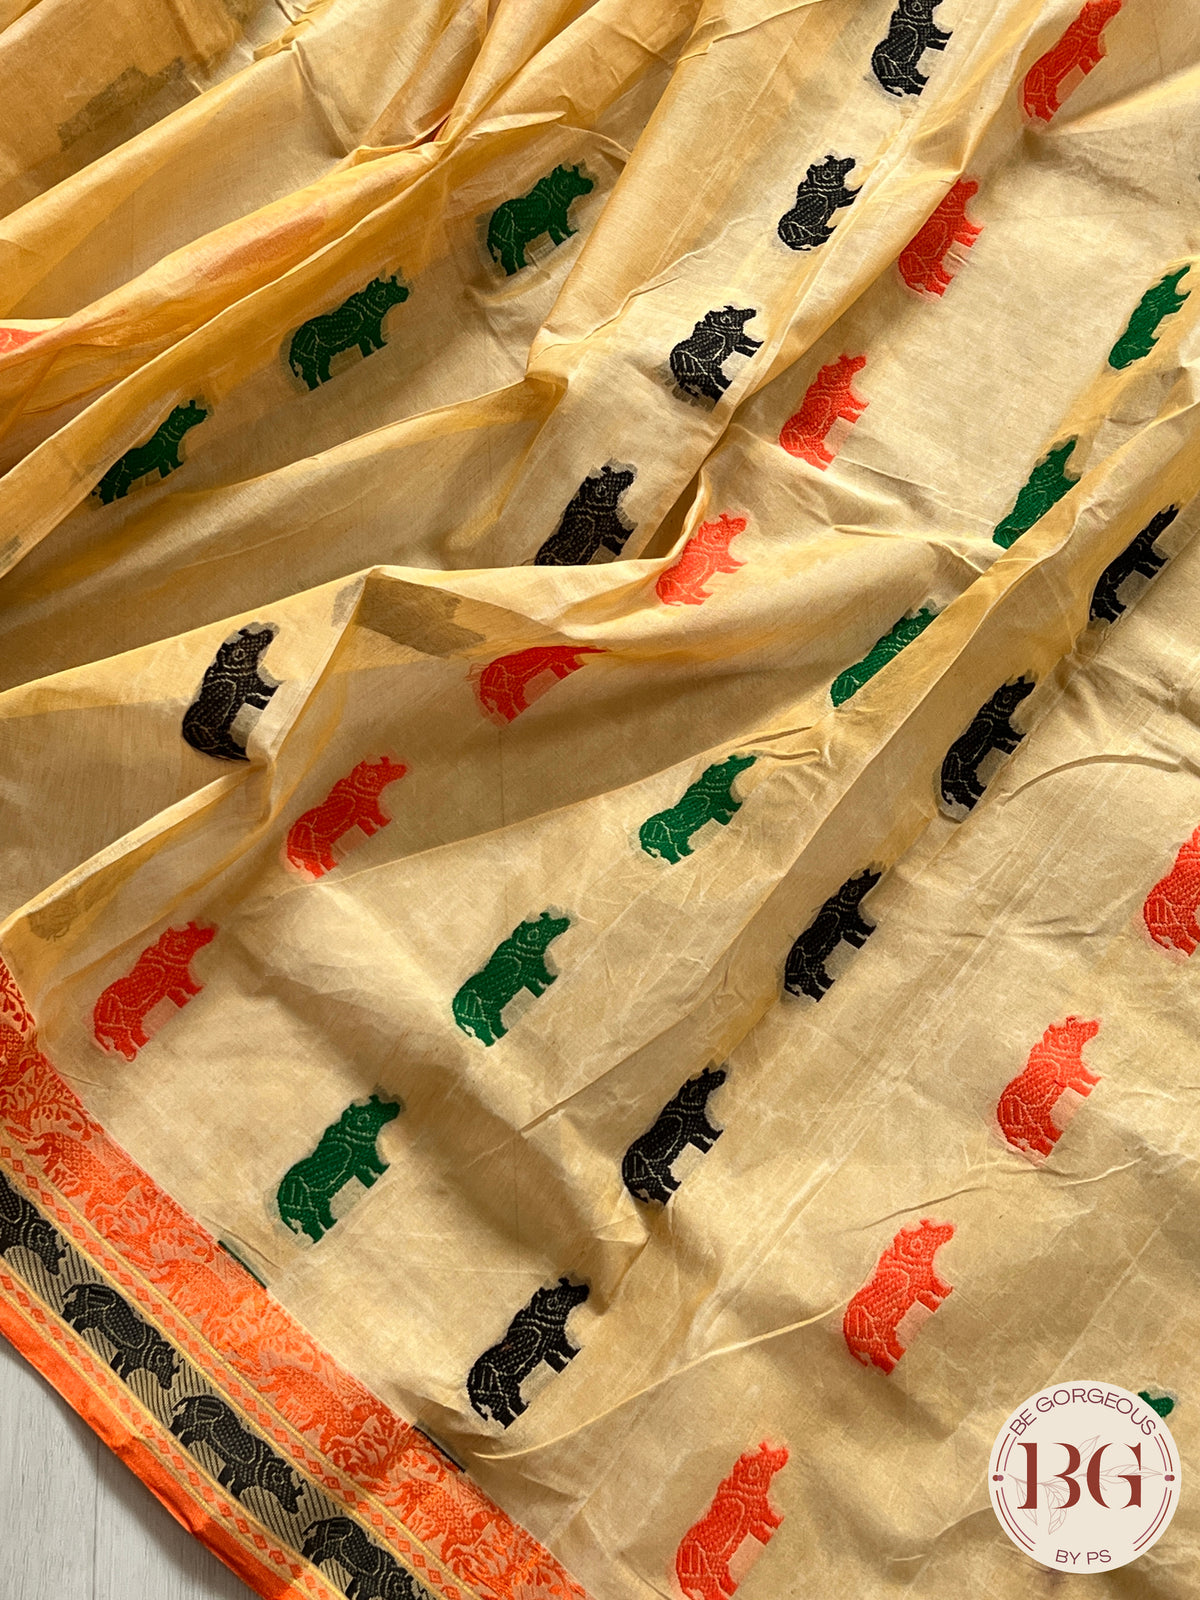 Kaziranga Assam Cotton Blend Saree in CREAM ORANGE color with rhino motifs